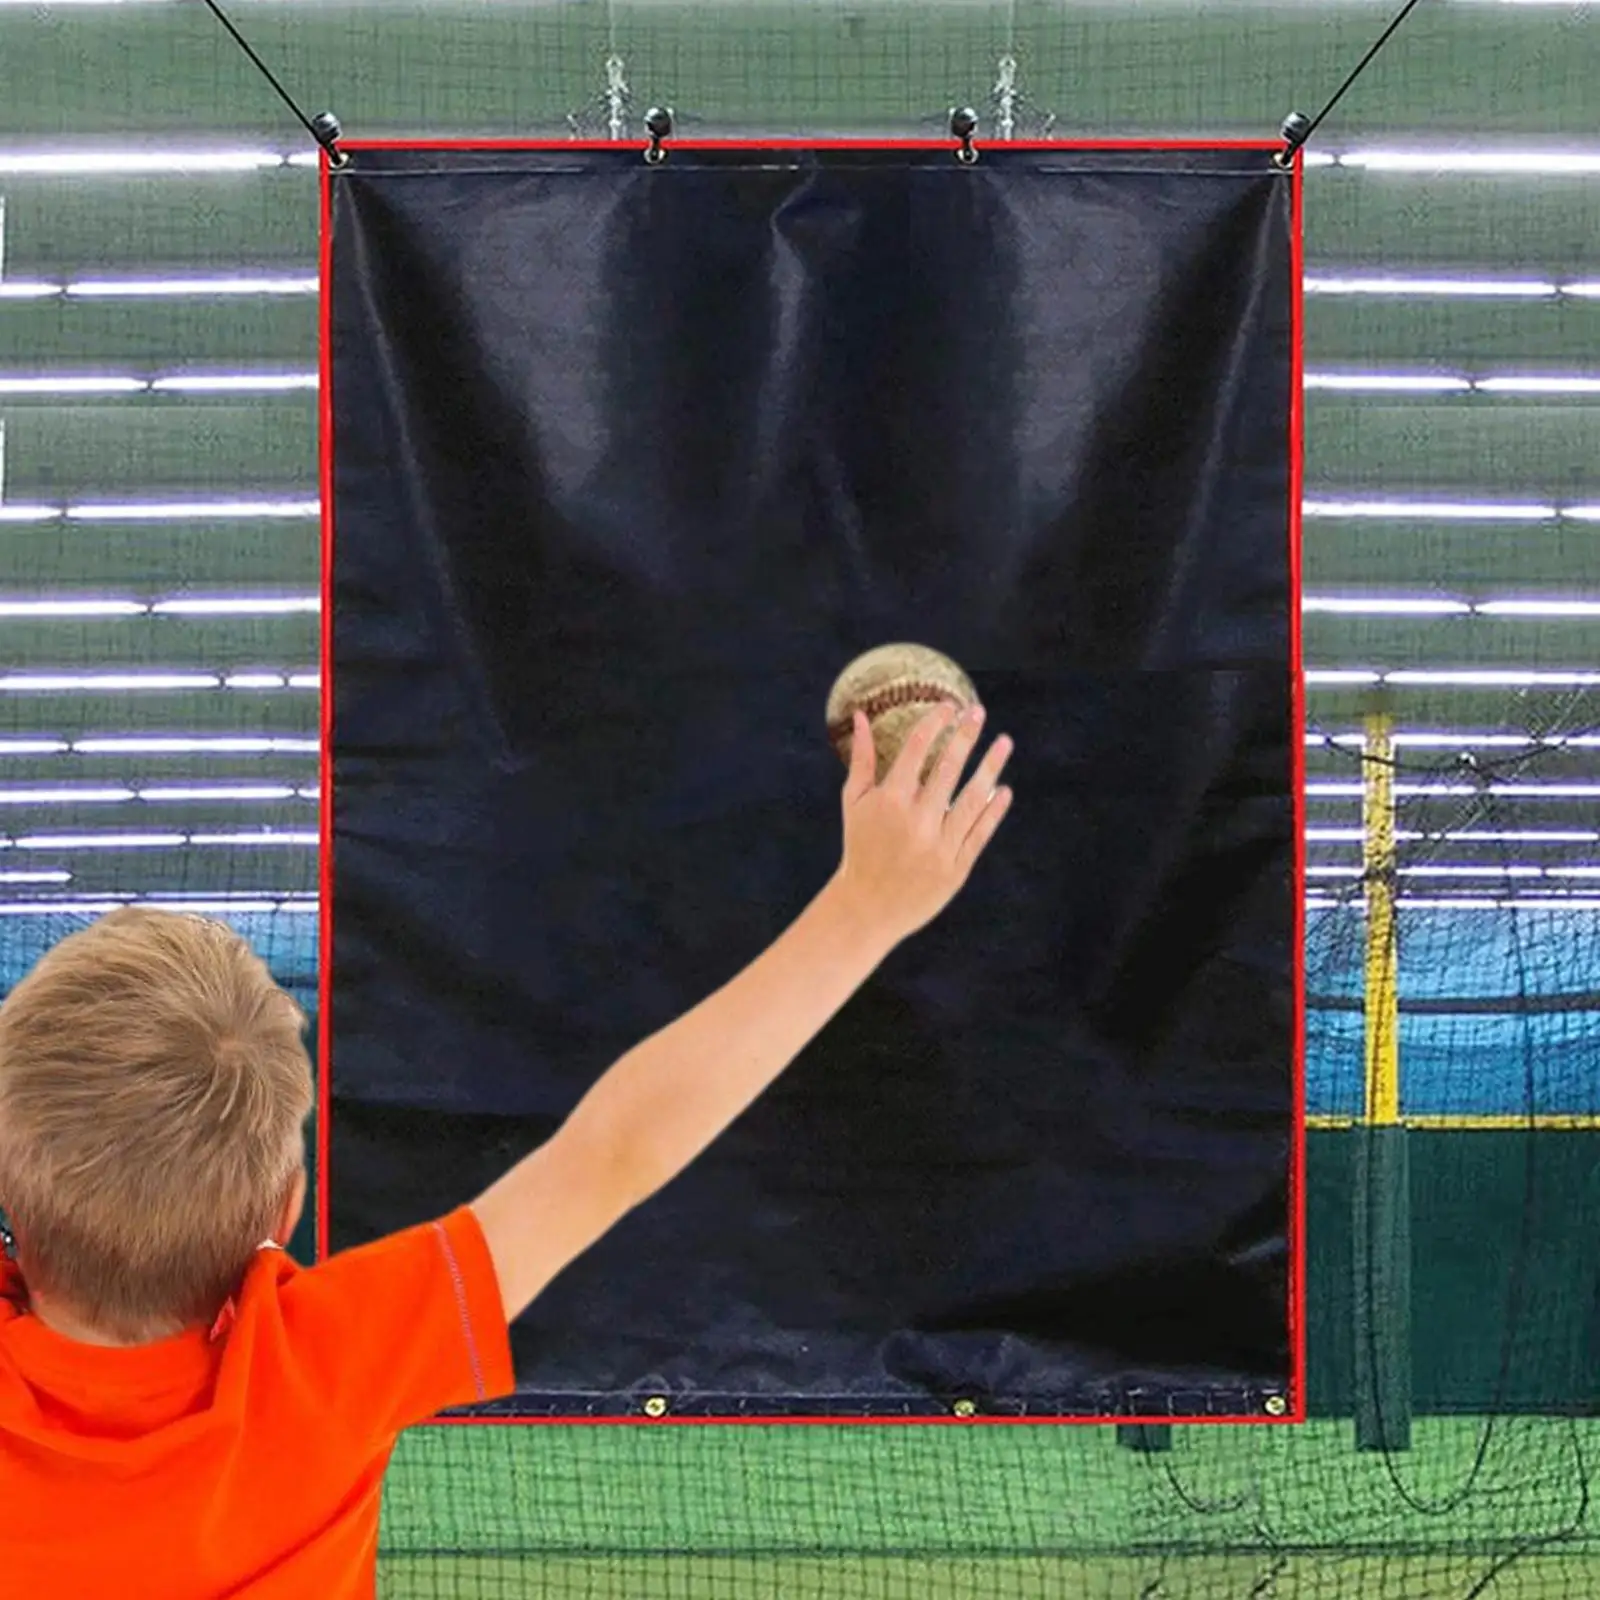 

Baseball/Softball Backstop Black Batting Cage Backdrop and Net Saver Durable Facility Backstops for Pitching Outdoors